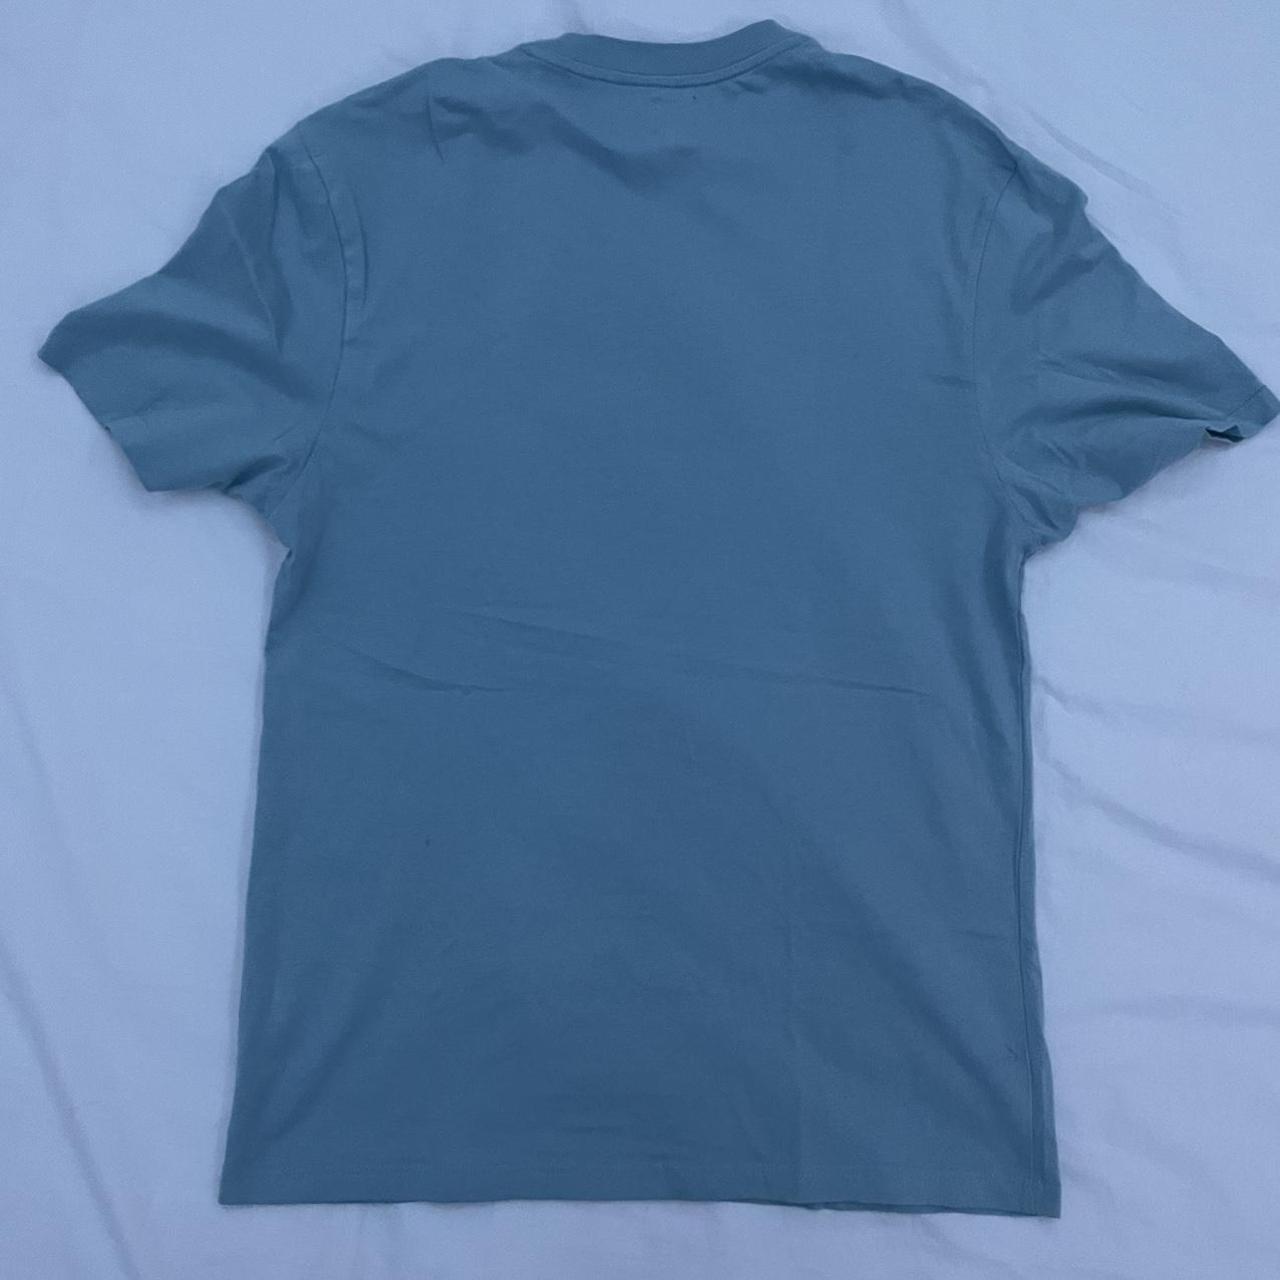 River Island Men's Blue and White T-shirt | Depop